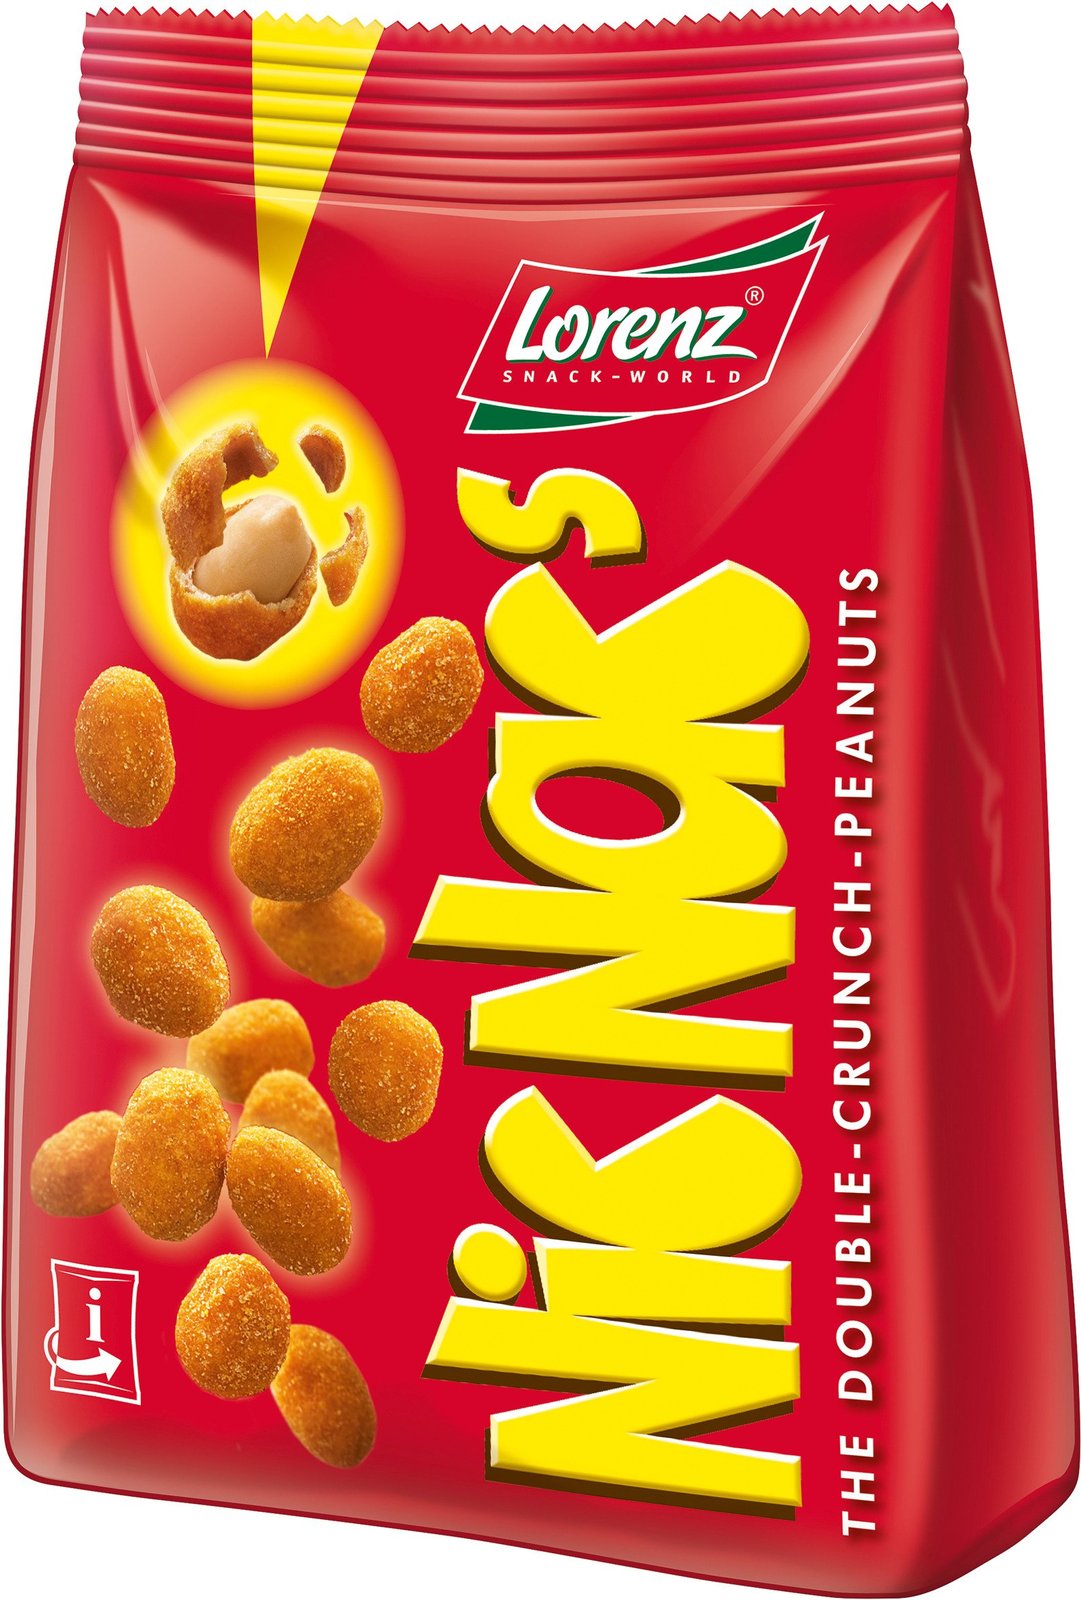 Lorenz Nic Nac's Double Crunch Peanuts 125g - Planters Nuts1081 x 1600